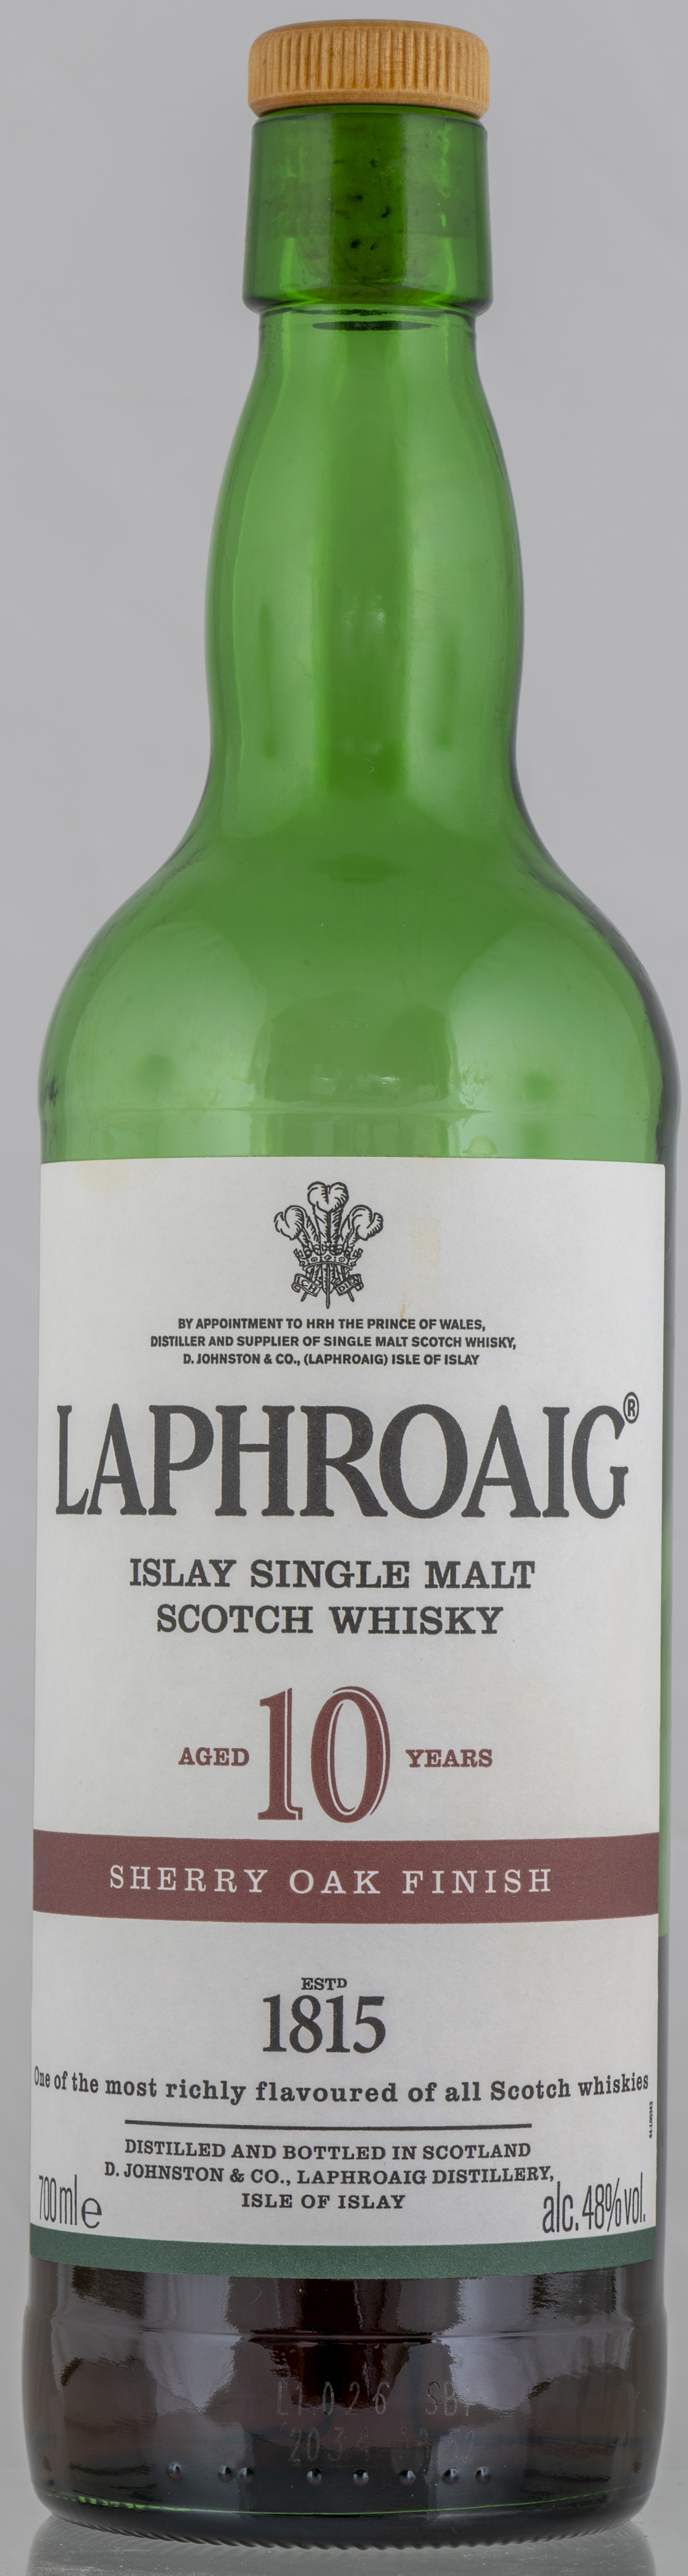 Billede: PHC_7249 - Laproaig 10 Sherry Oak Finish - bottle front.jpg